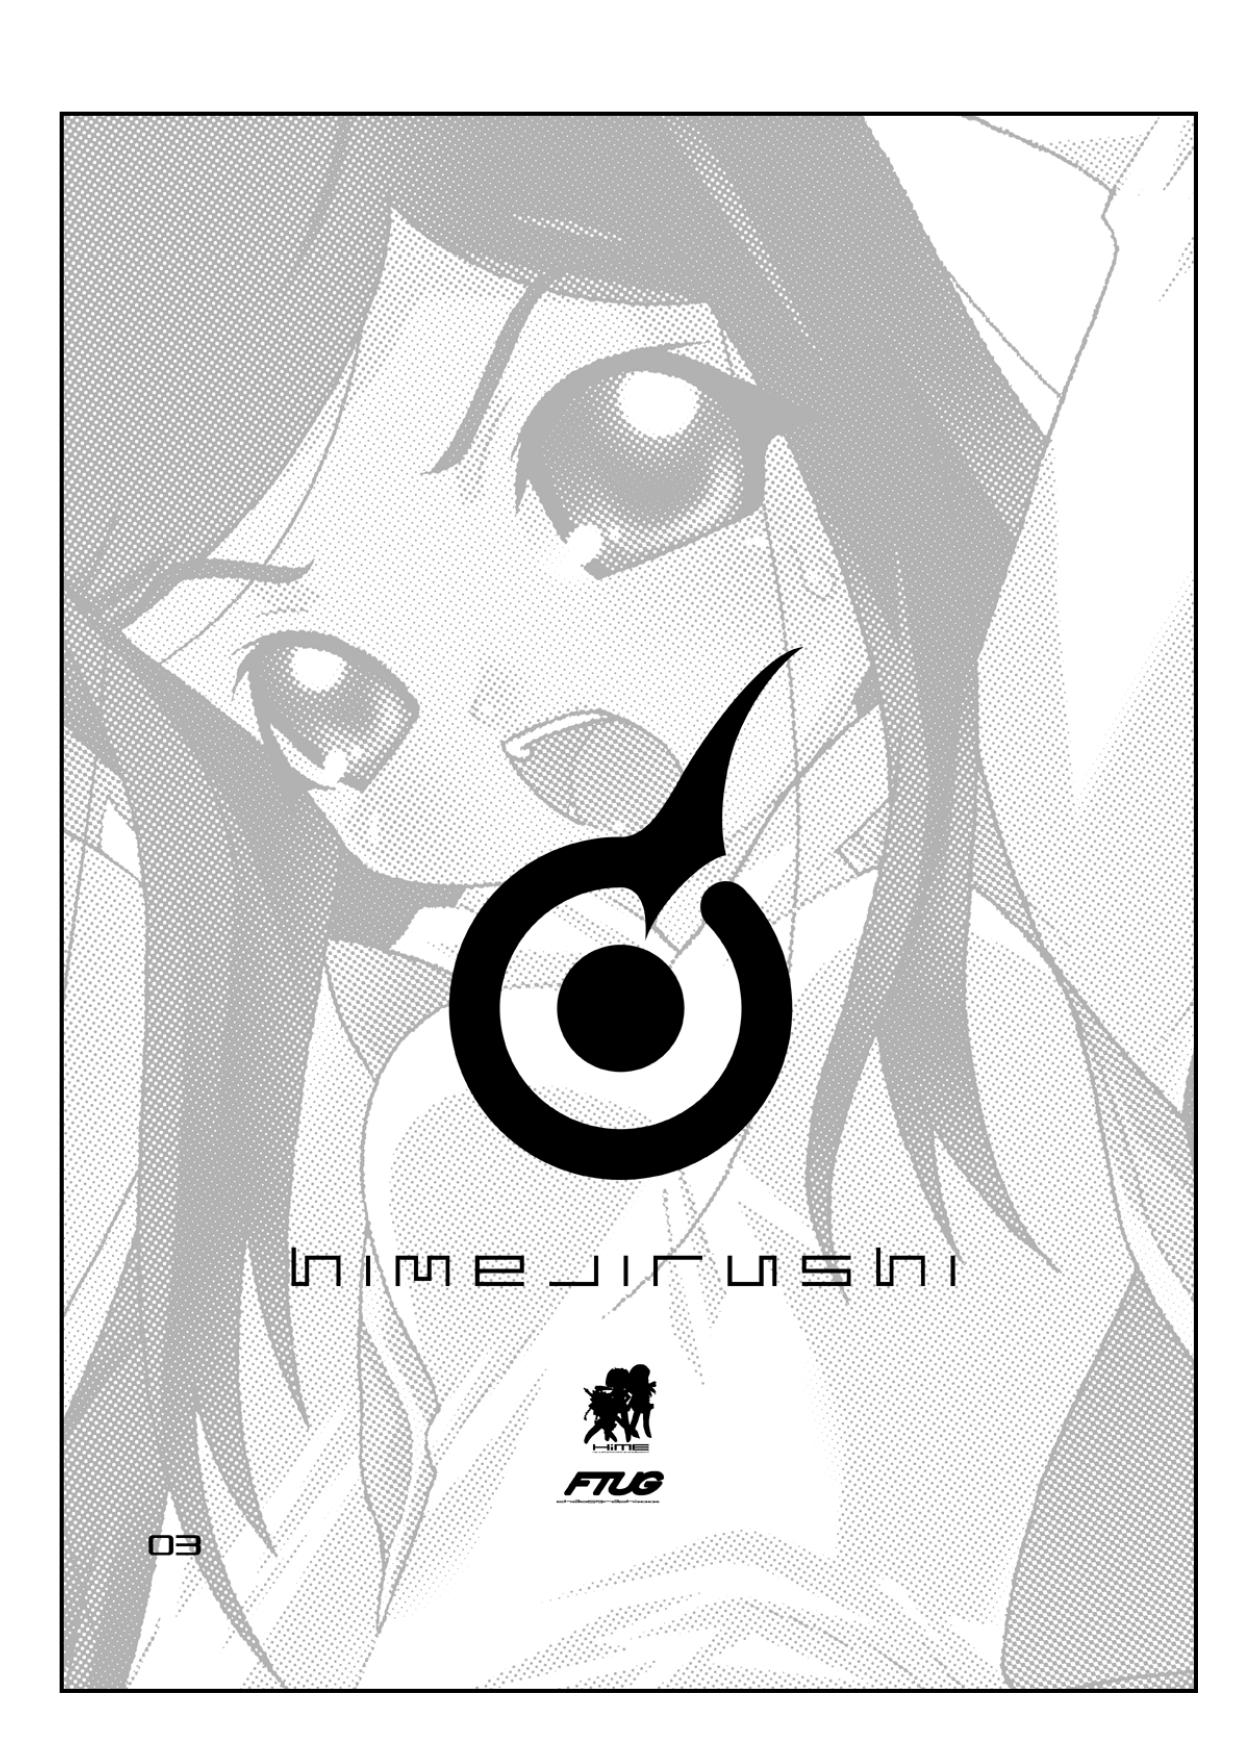 Love Hime Dirushi. - Mai-hime Nasty - Page 2